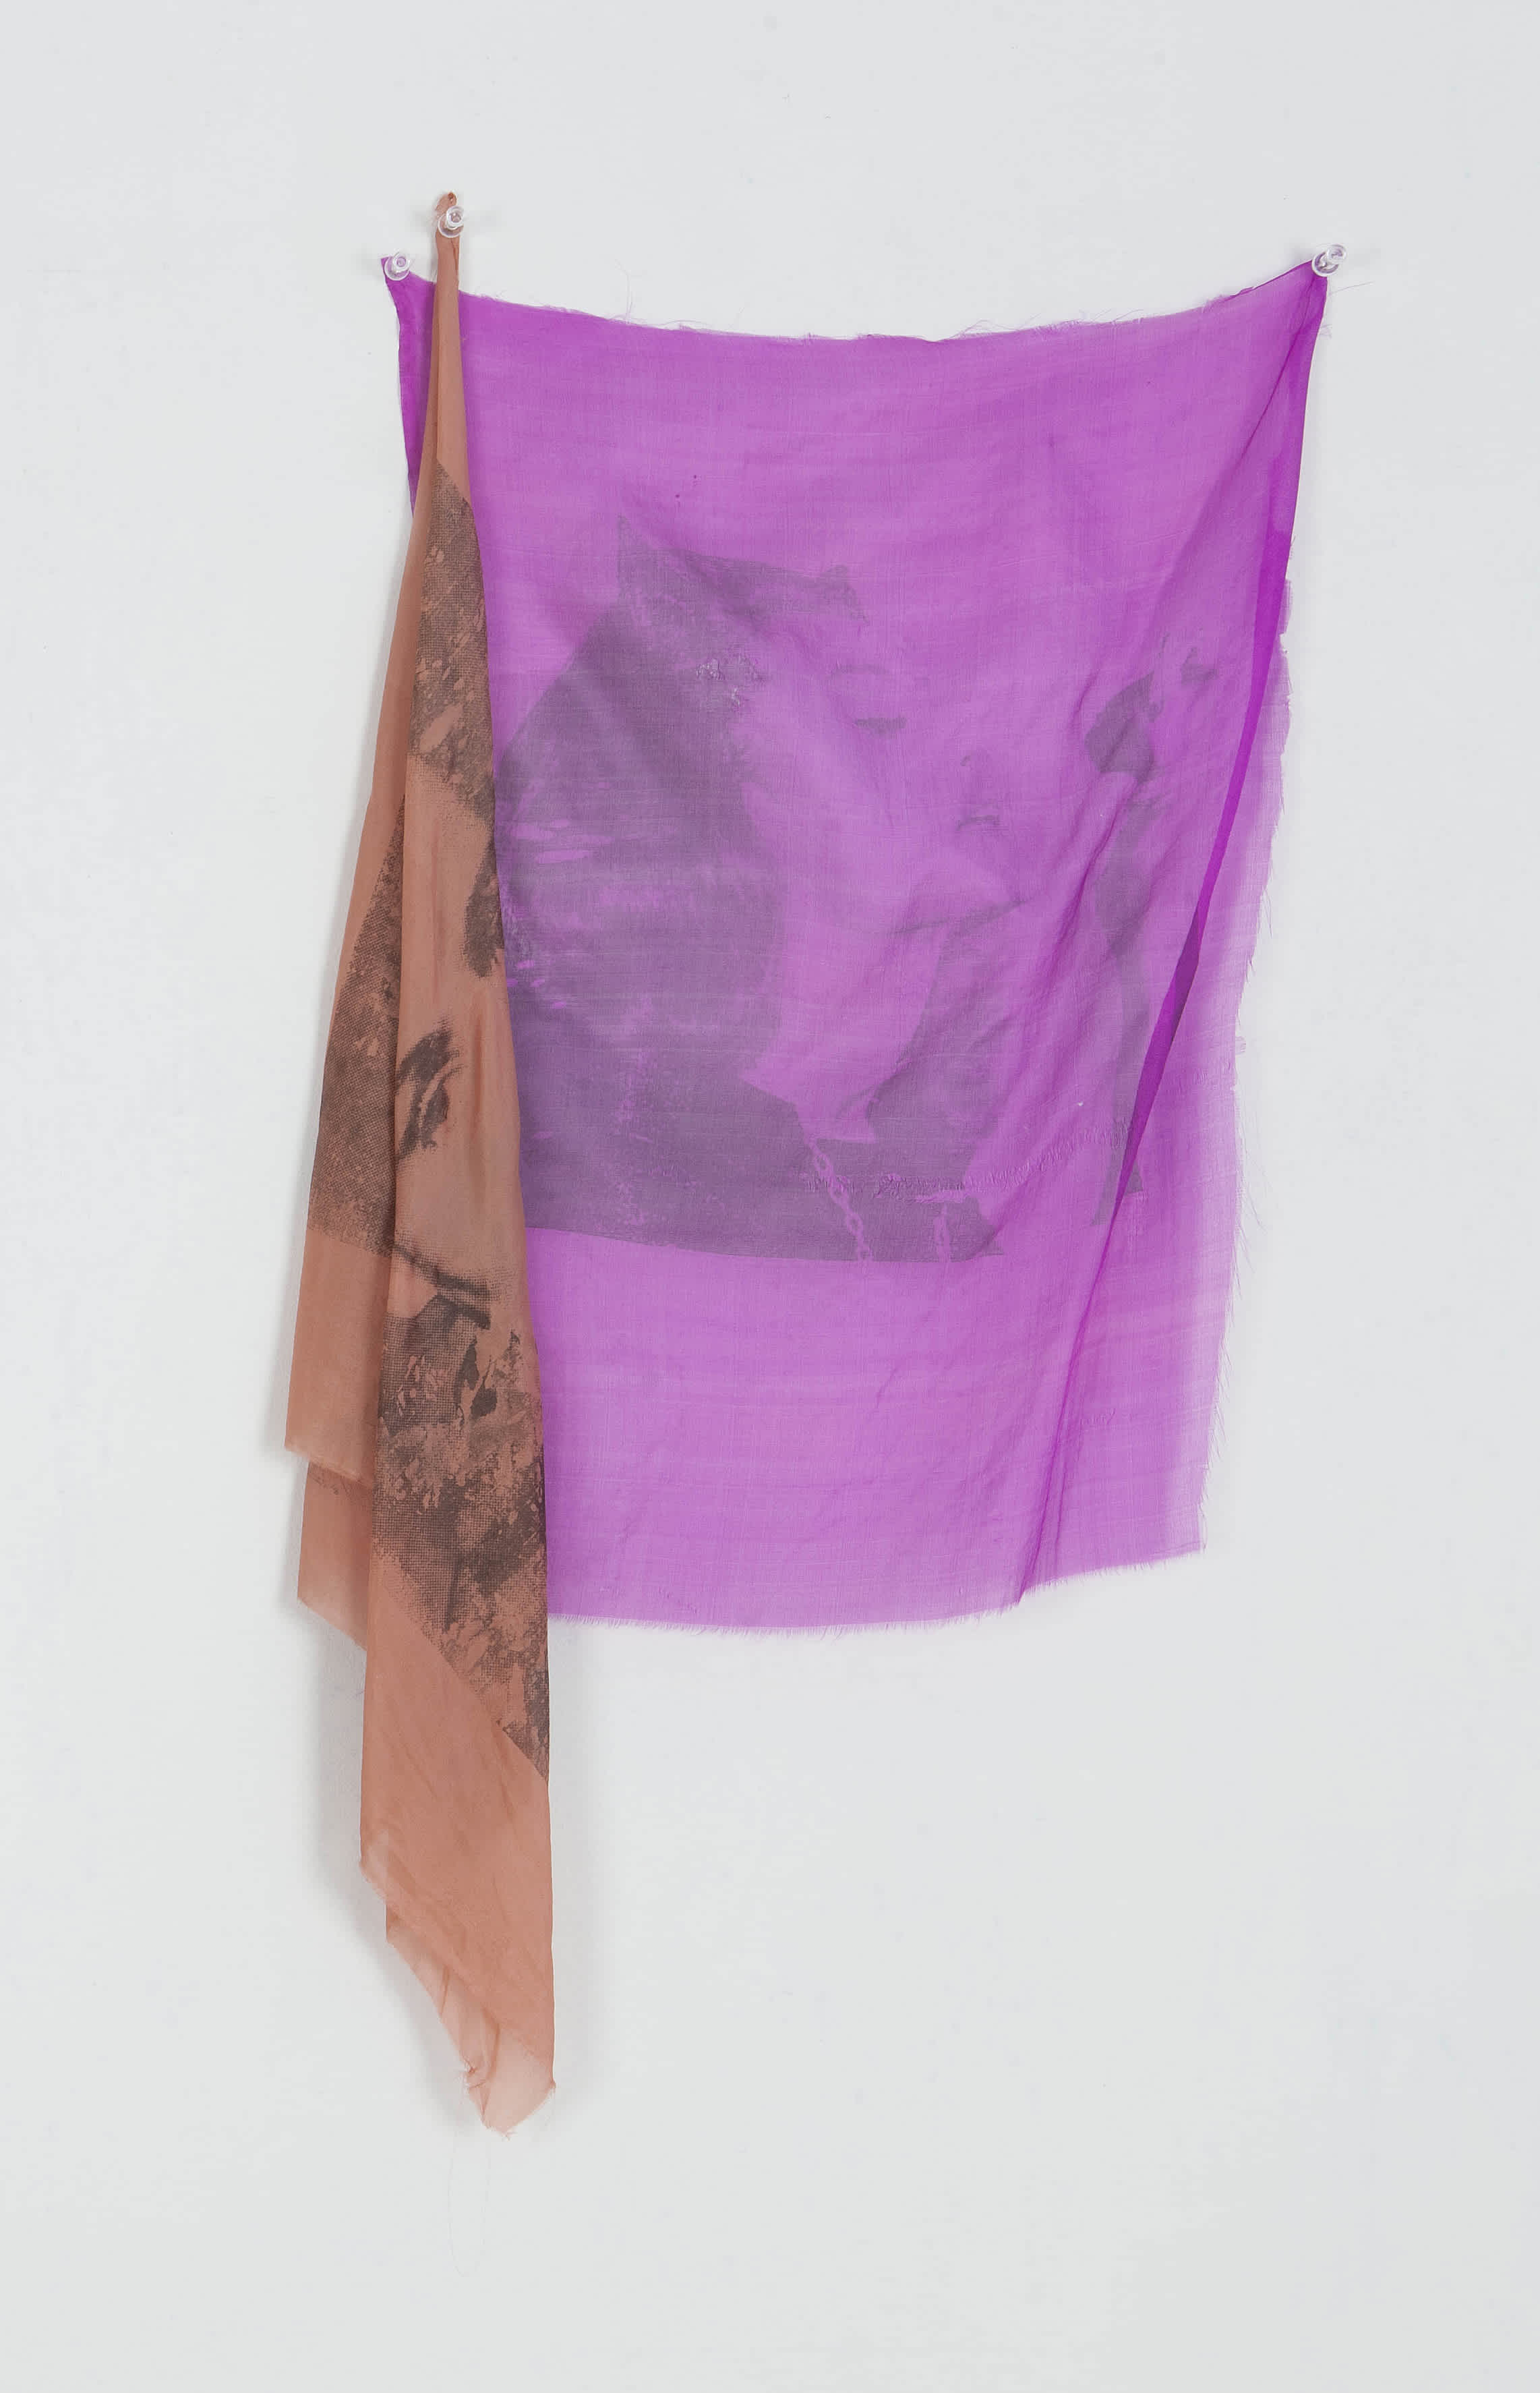 Print on fabric, cat woman, purple